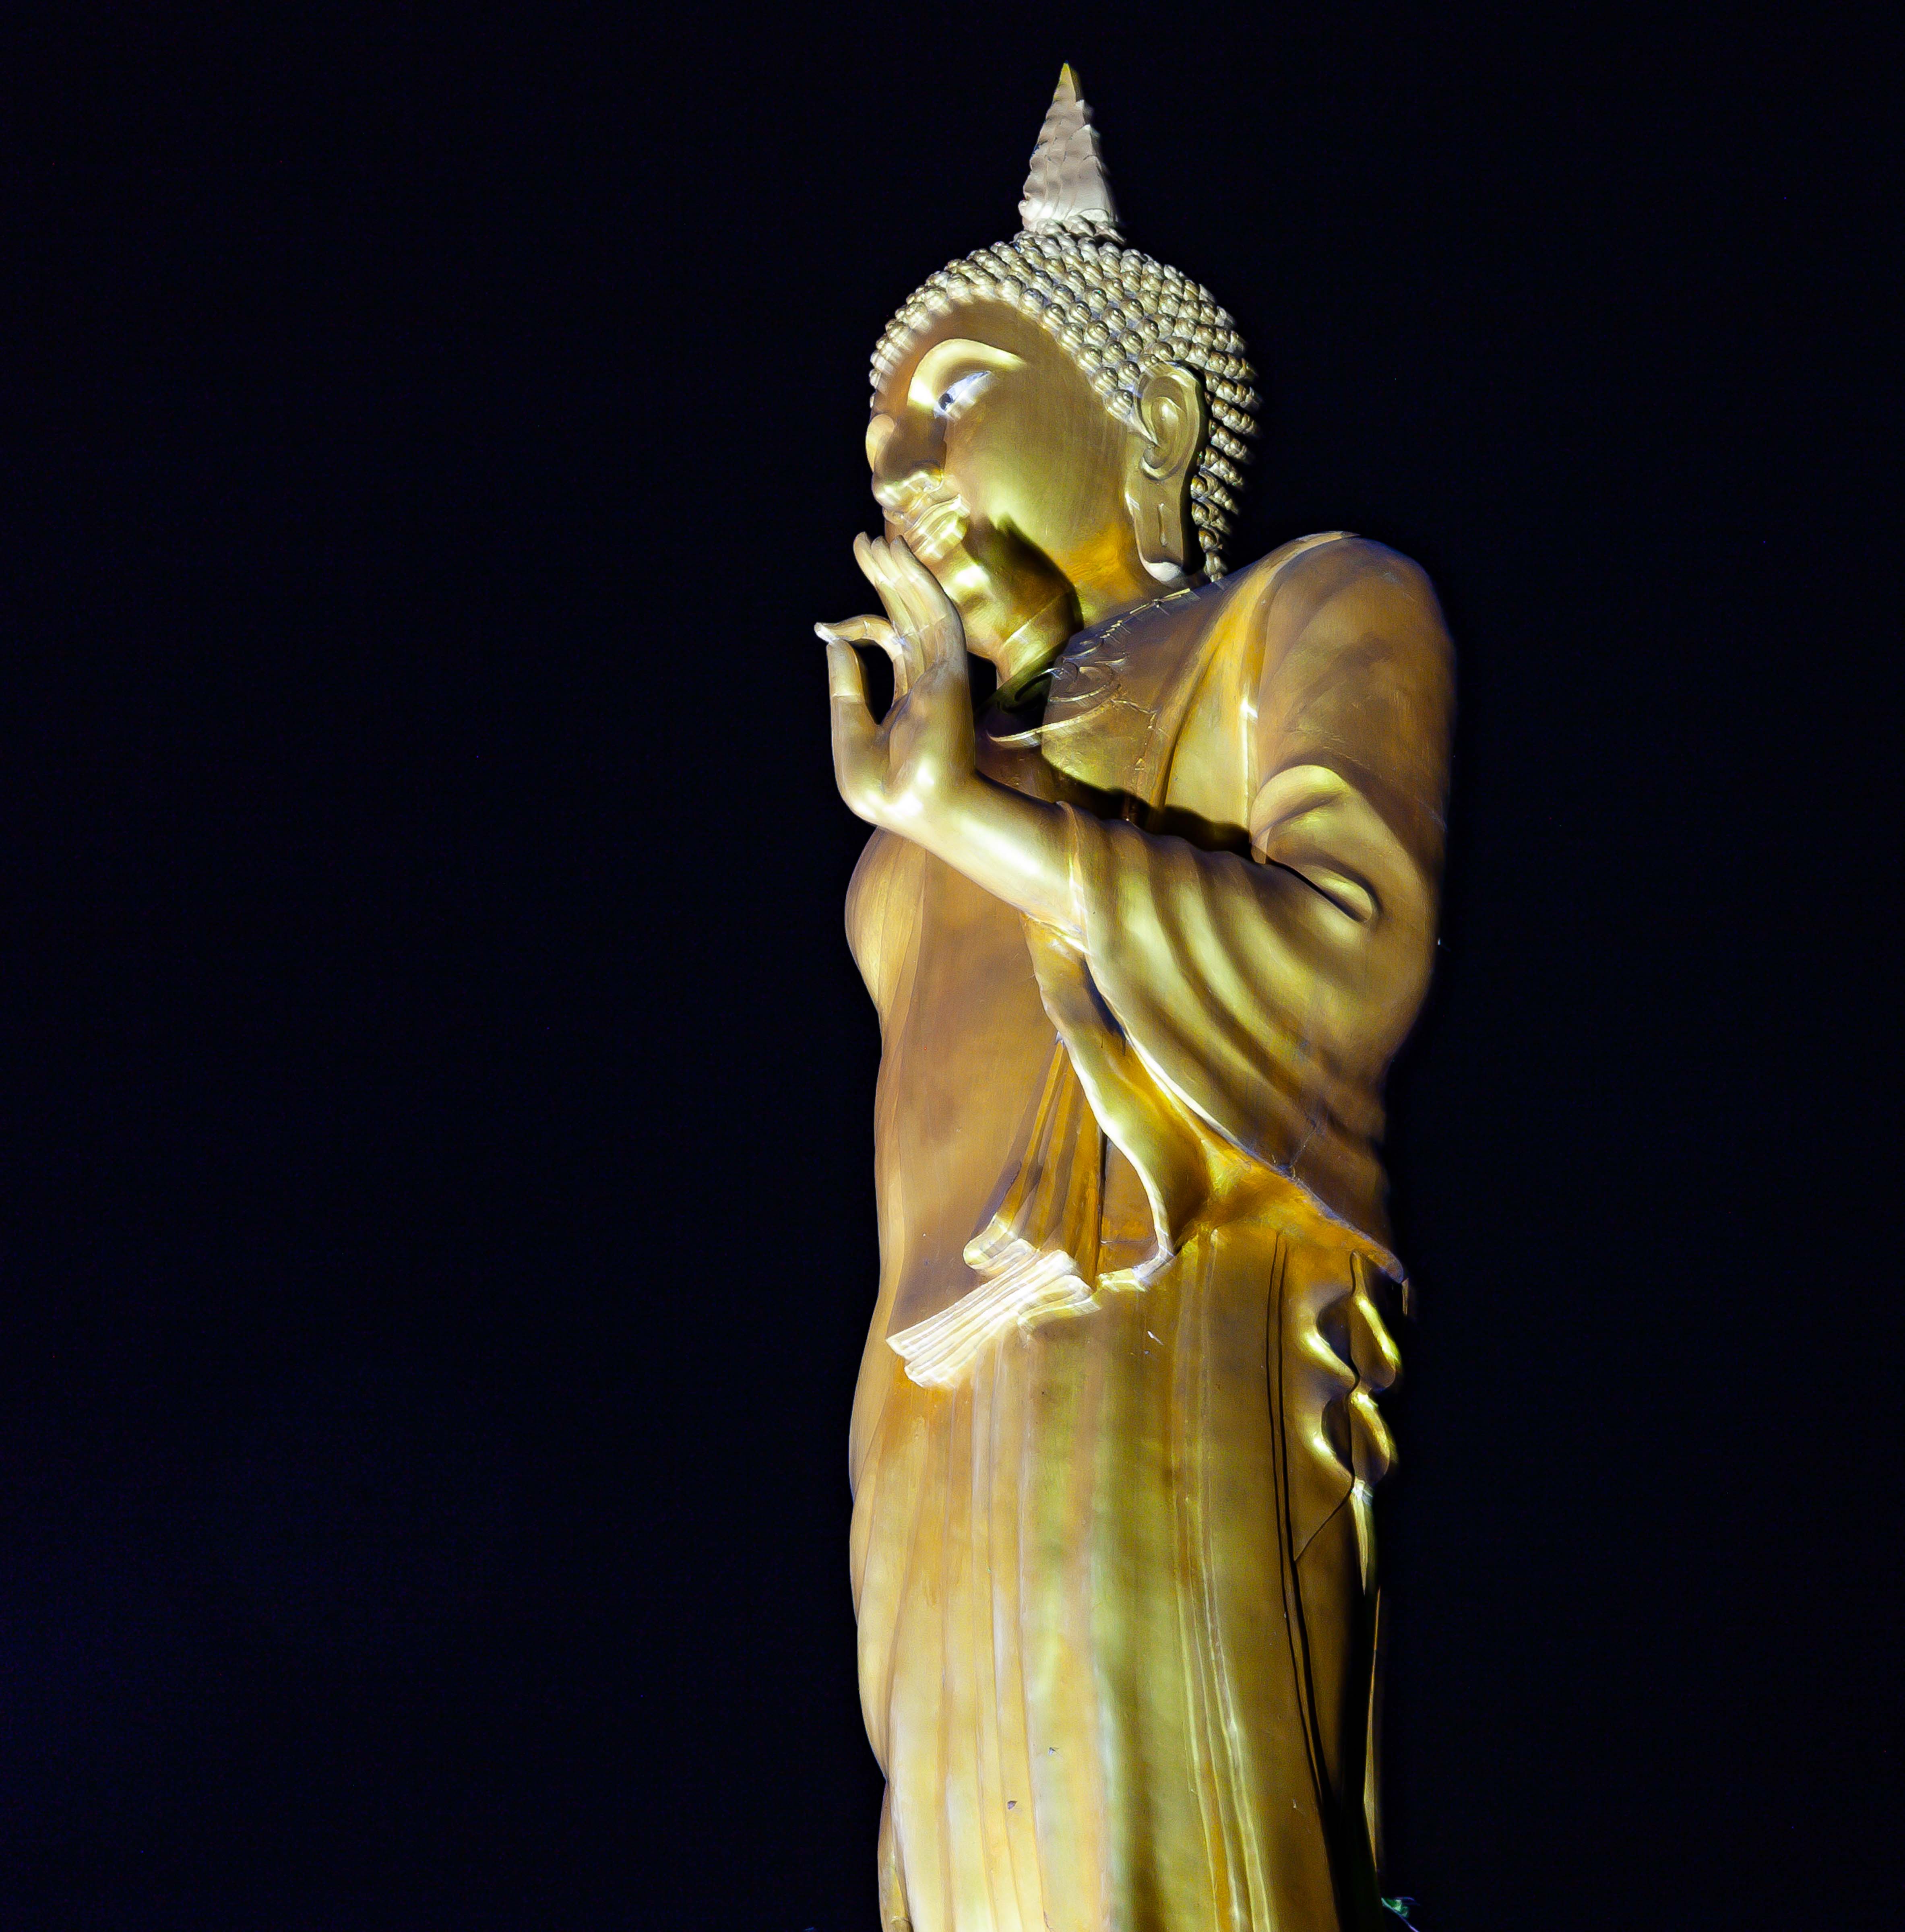 Thailand, Chiang Mai Prov, Night Statue, 2008, IMG 3946